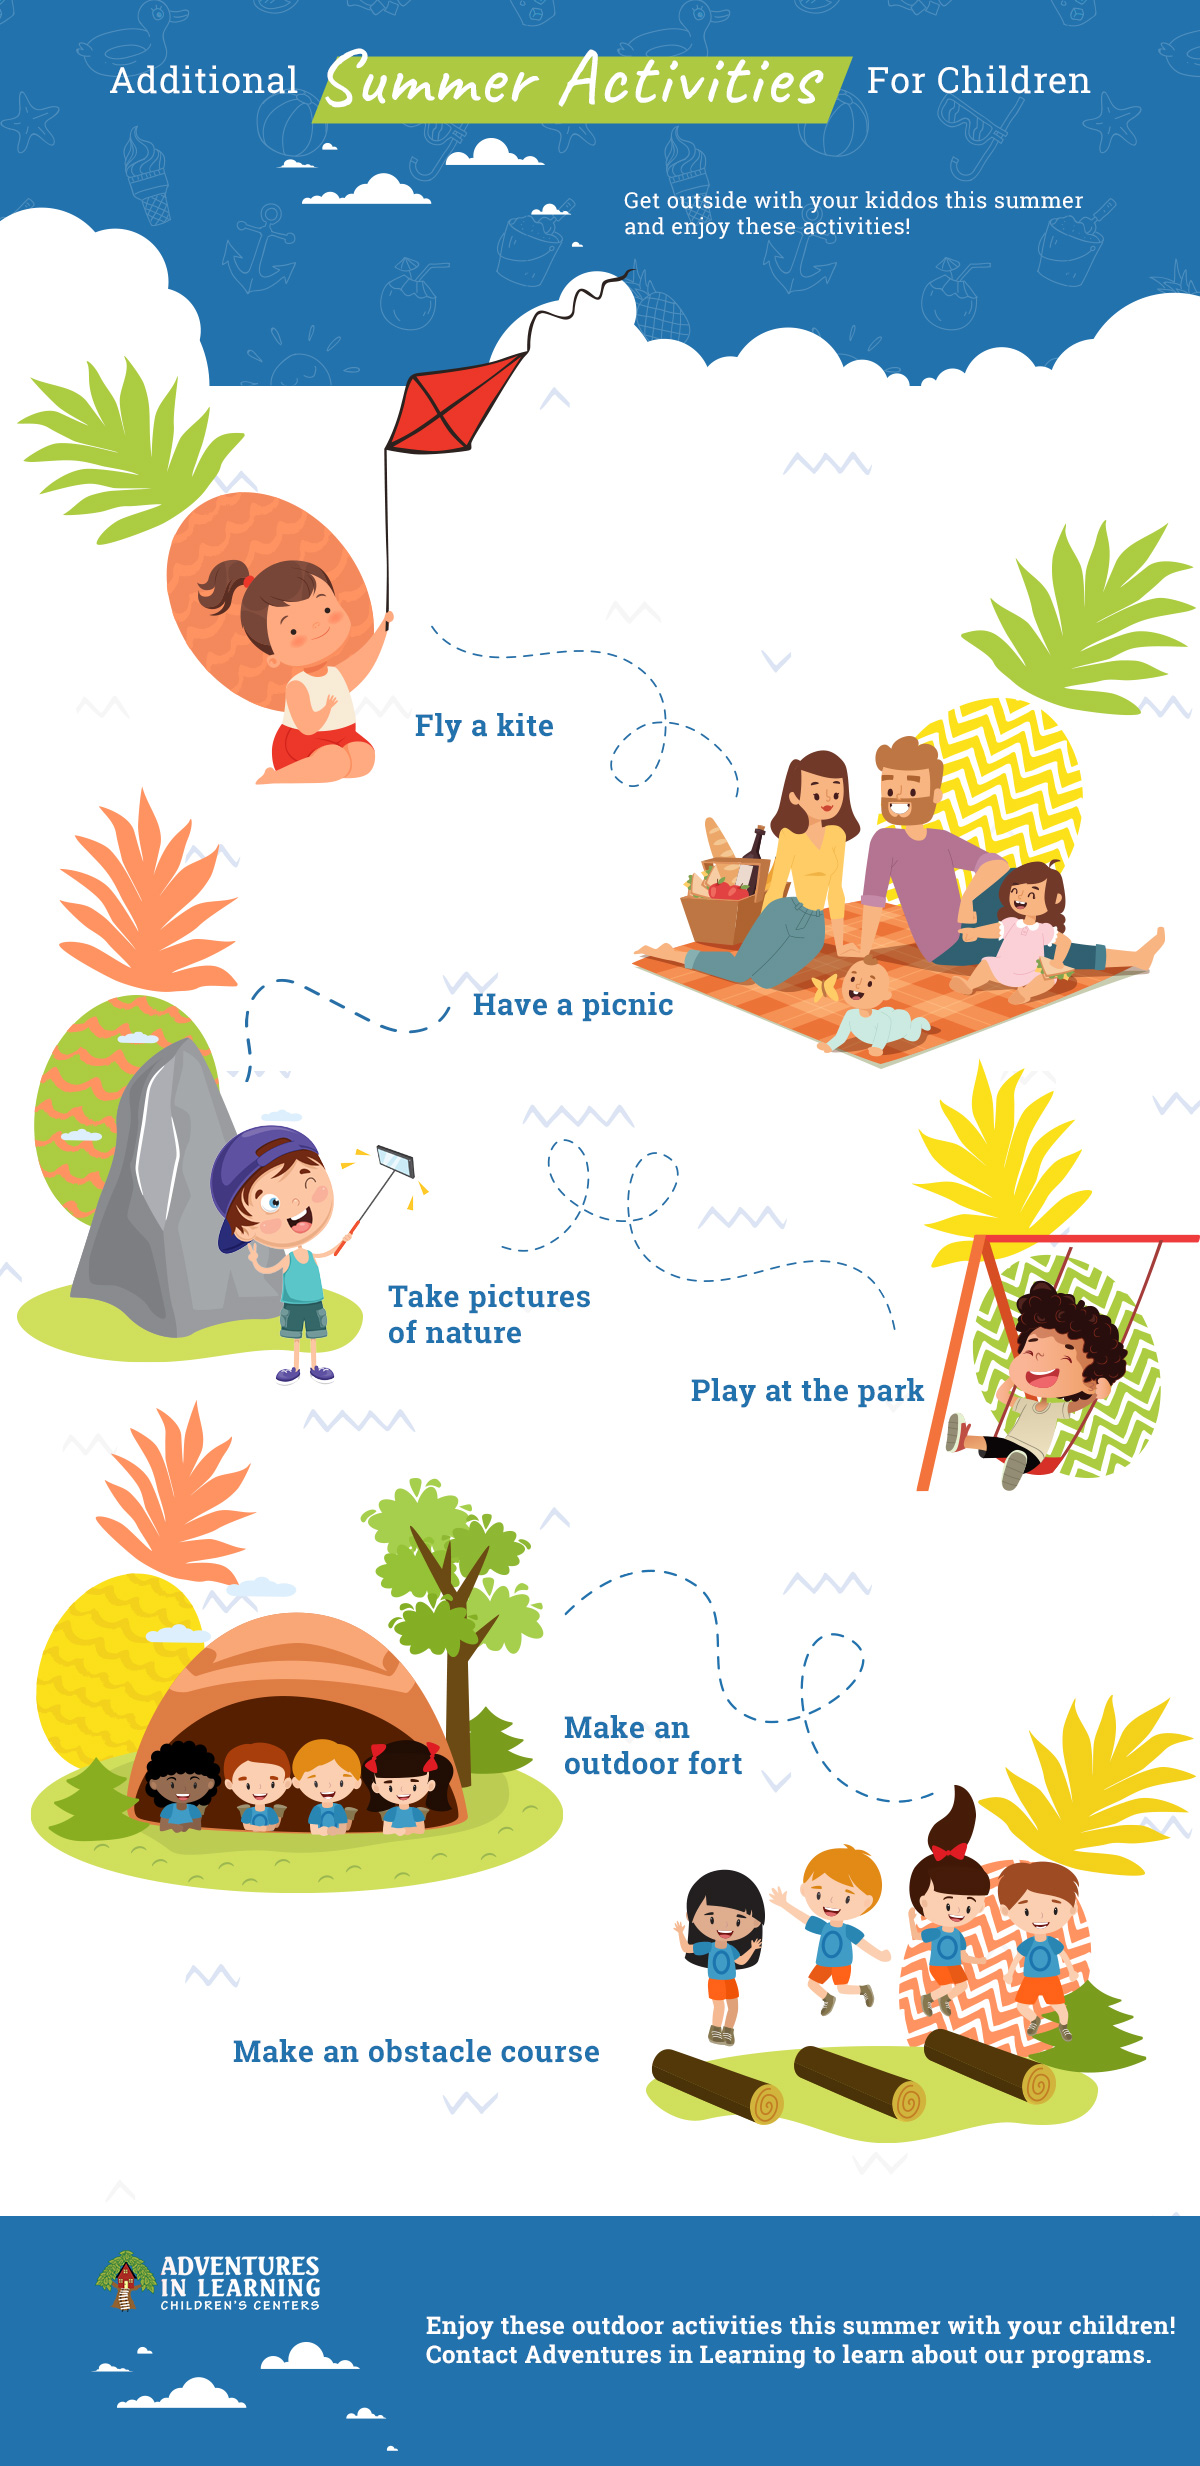 Additional Summer Activities for Children